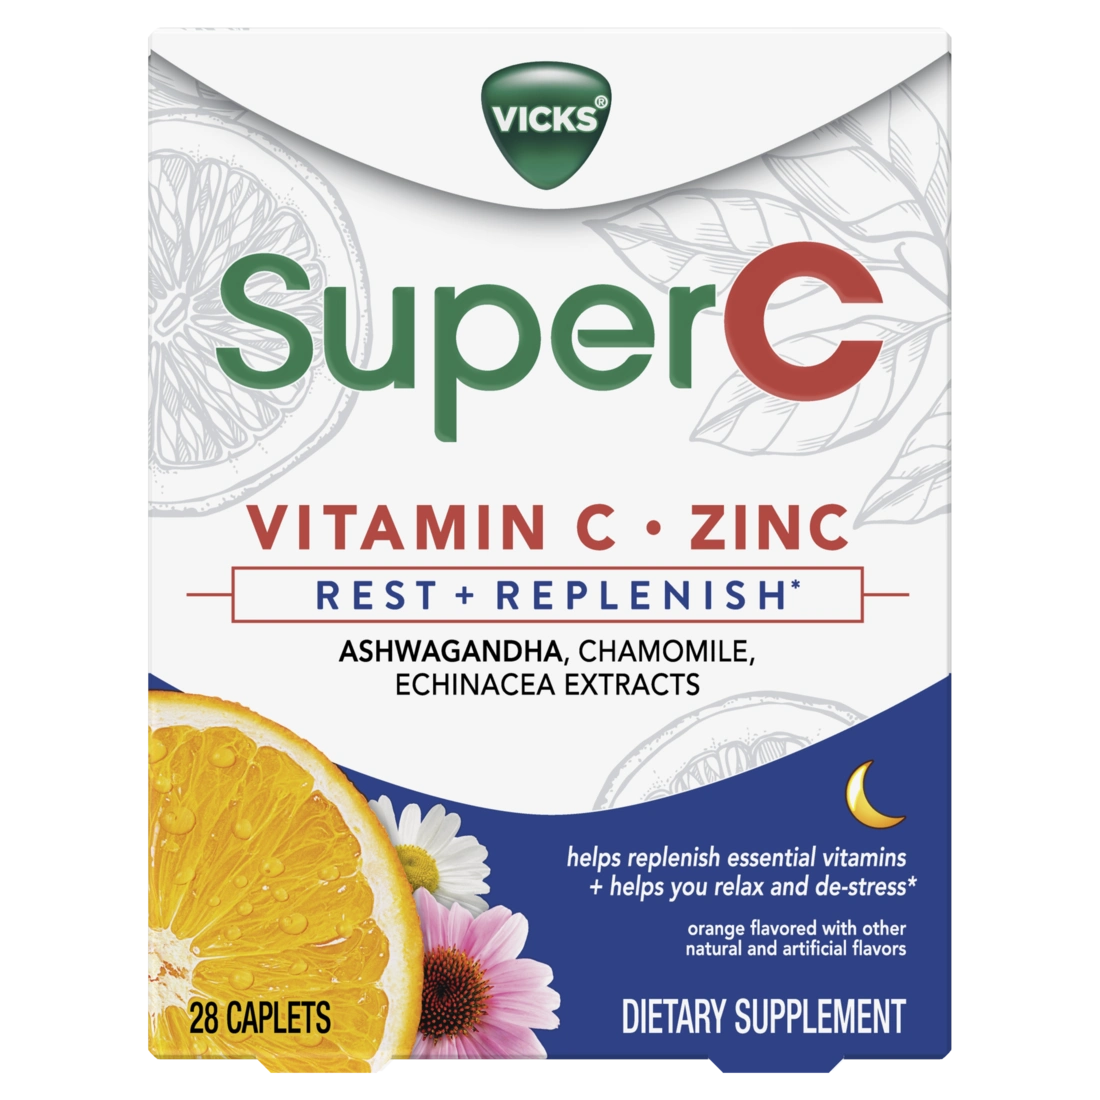 Vicks Super C Rest + Replenish Nighttime Supplement Caplets